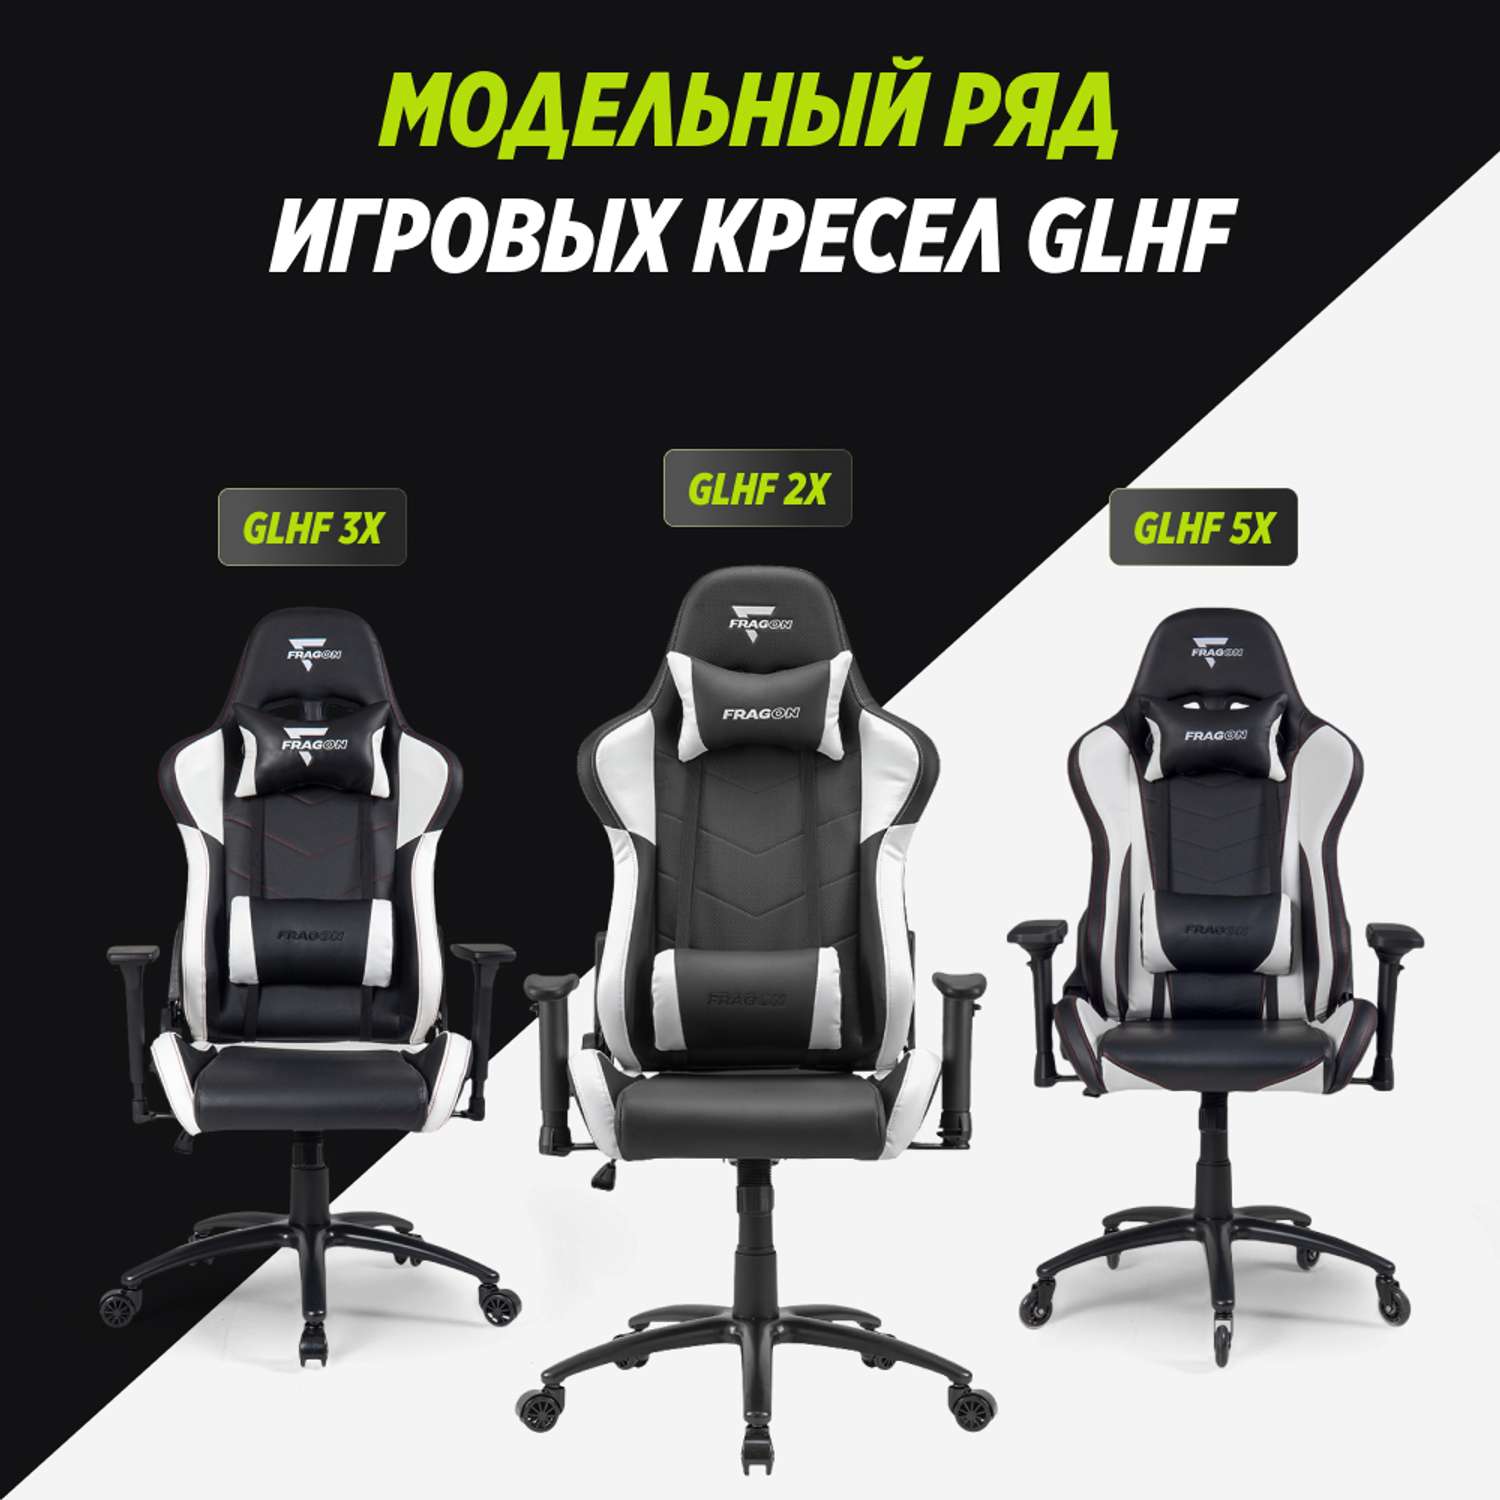 Компьютерное кресло GLHF серия 2X Black/White - фото 10